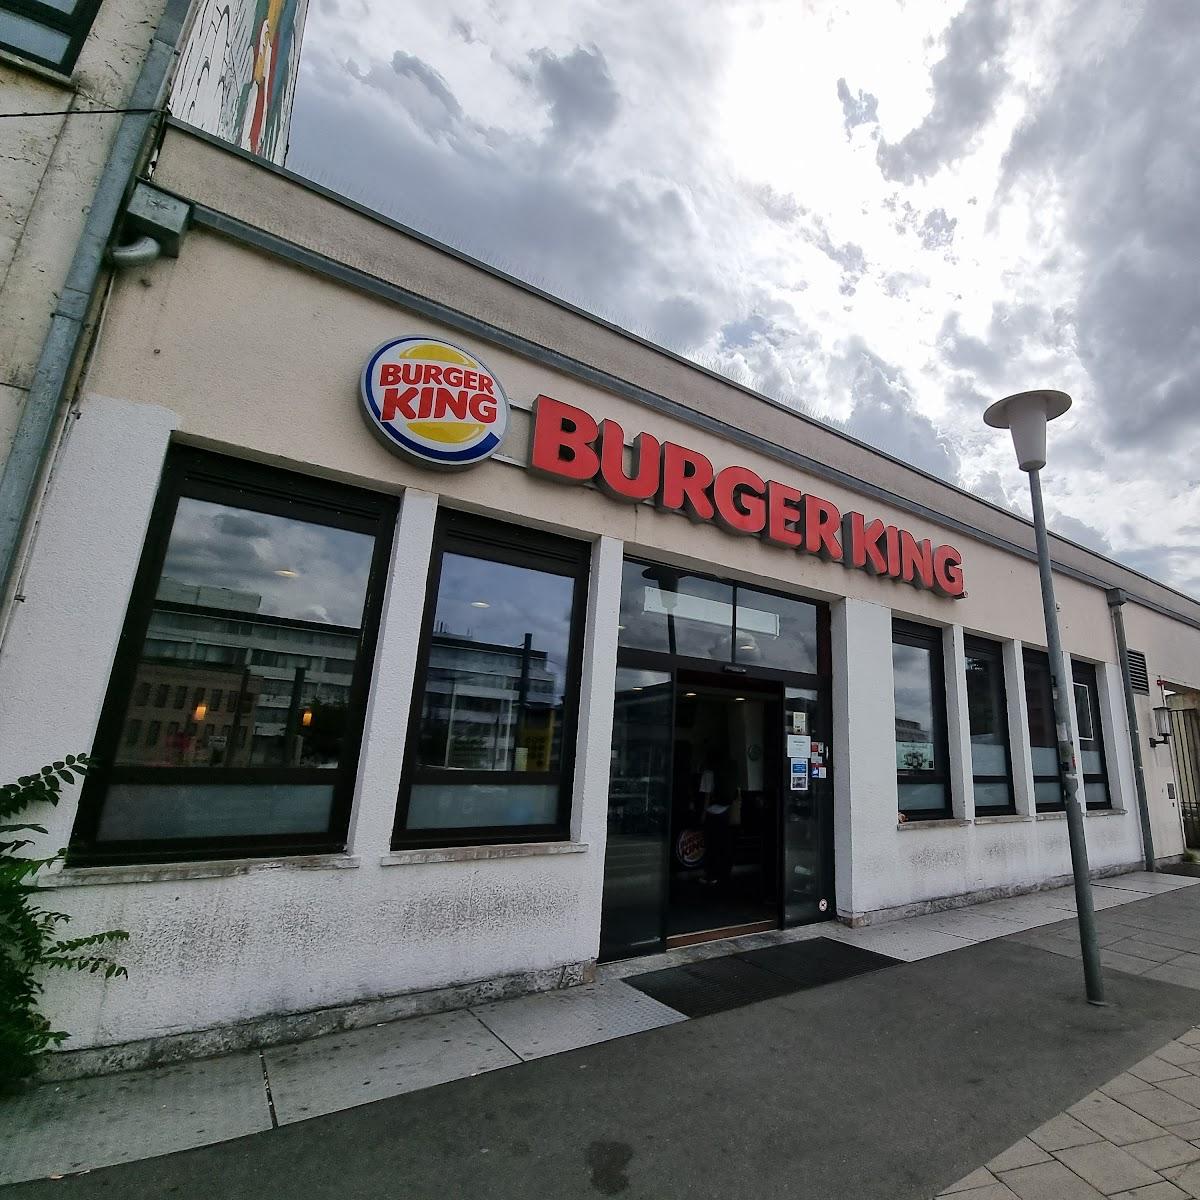 Restaurant "Burger King" in Heidelberg